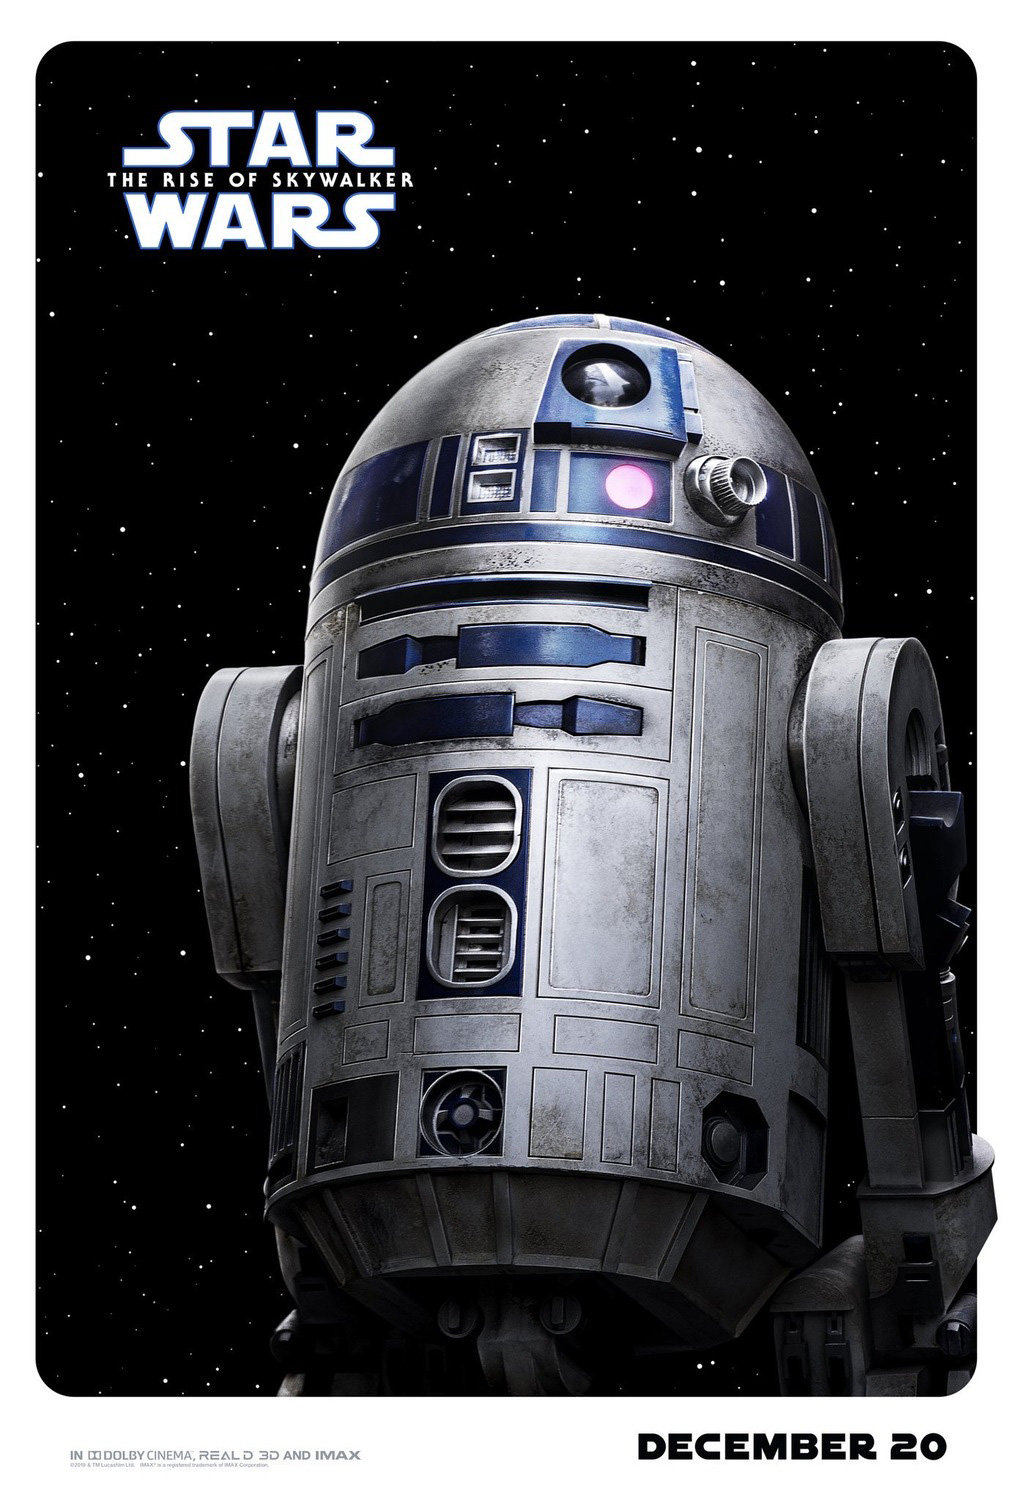 Star Wars: The Rise of Skywalker | Character Banner Finishing & Illustration